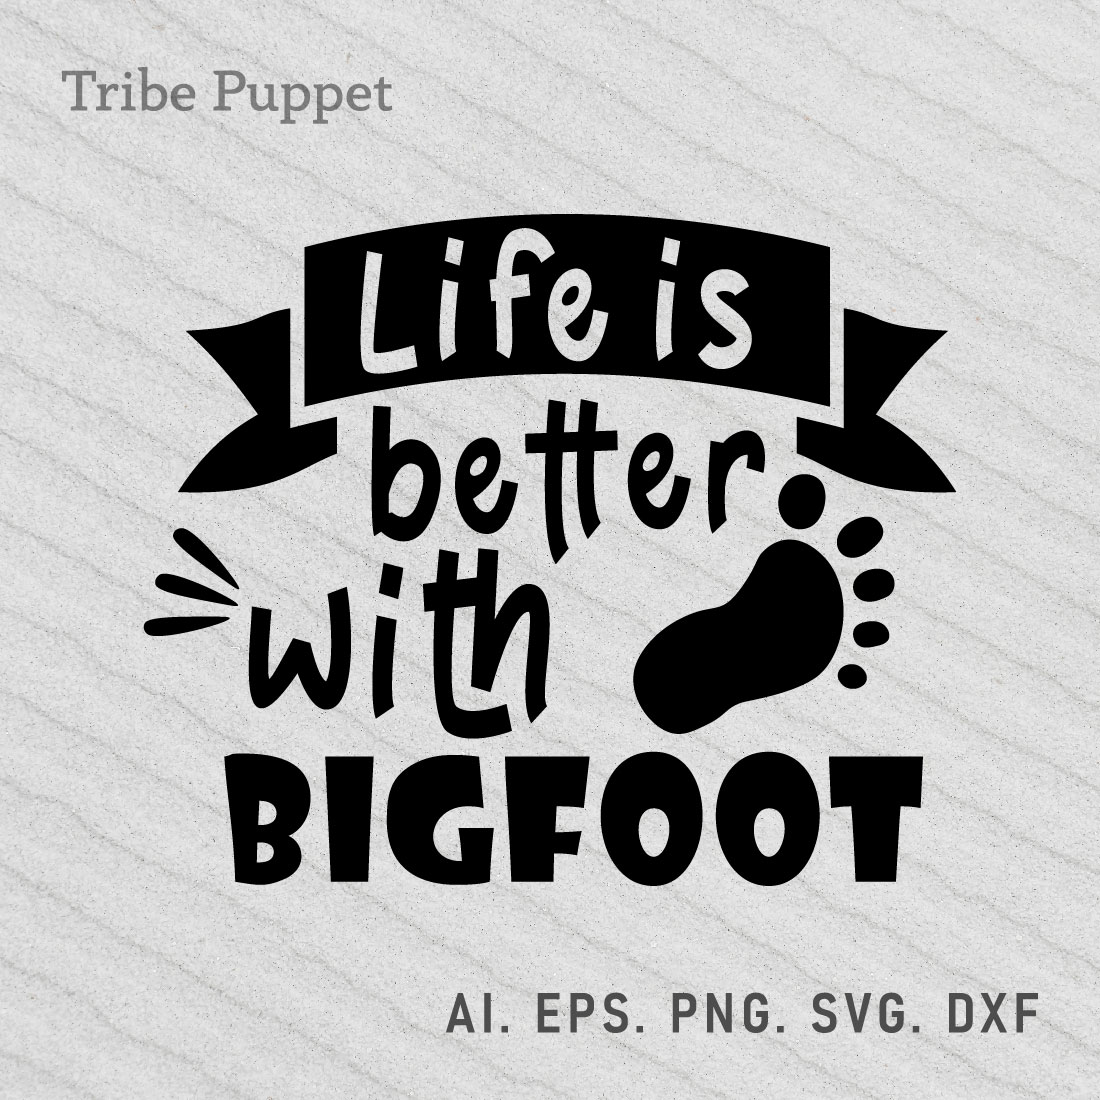 Bigfoot preview image.